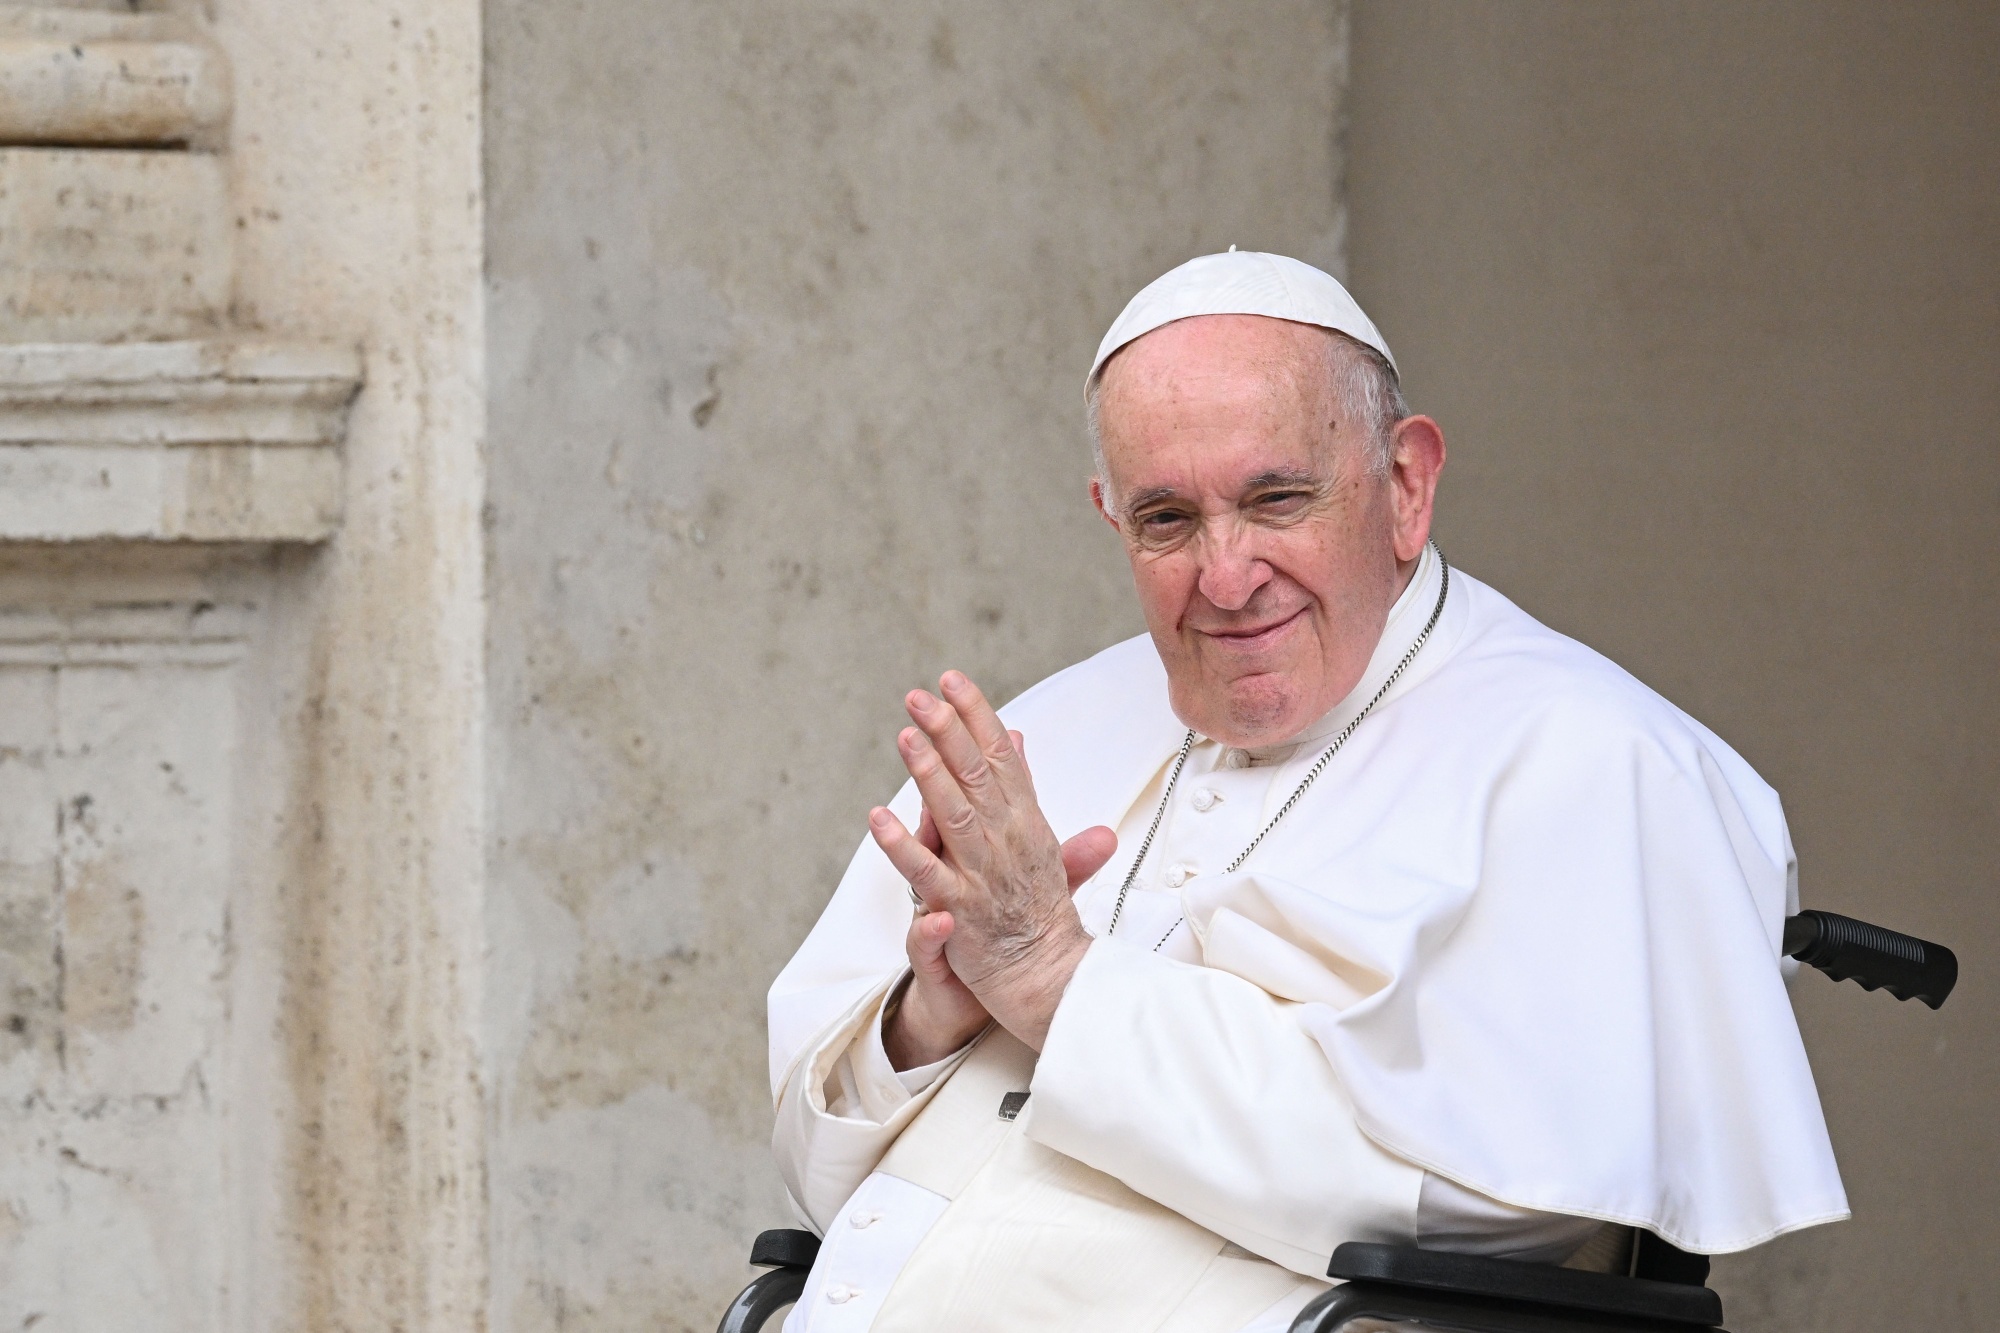 Pope Francis gay slur: Vatican clarifies remarks